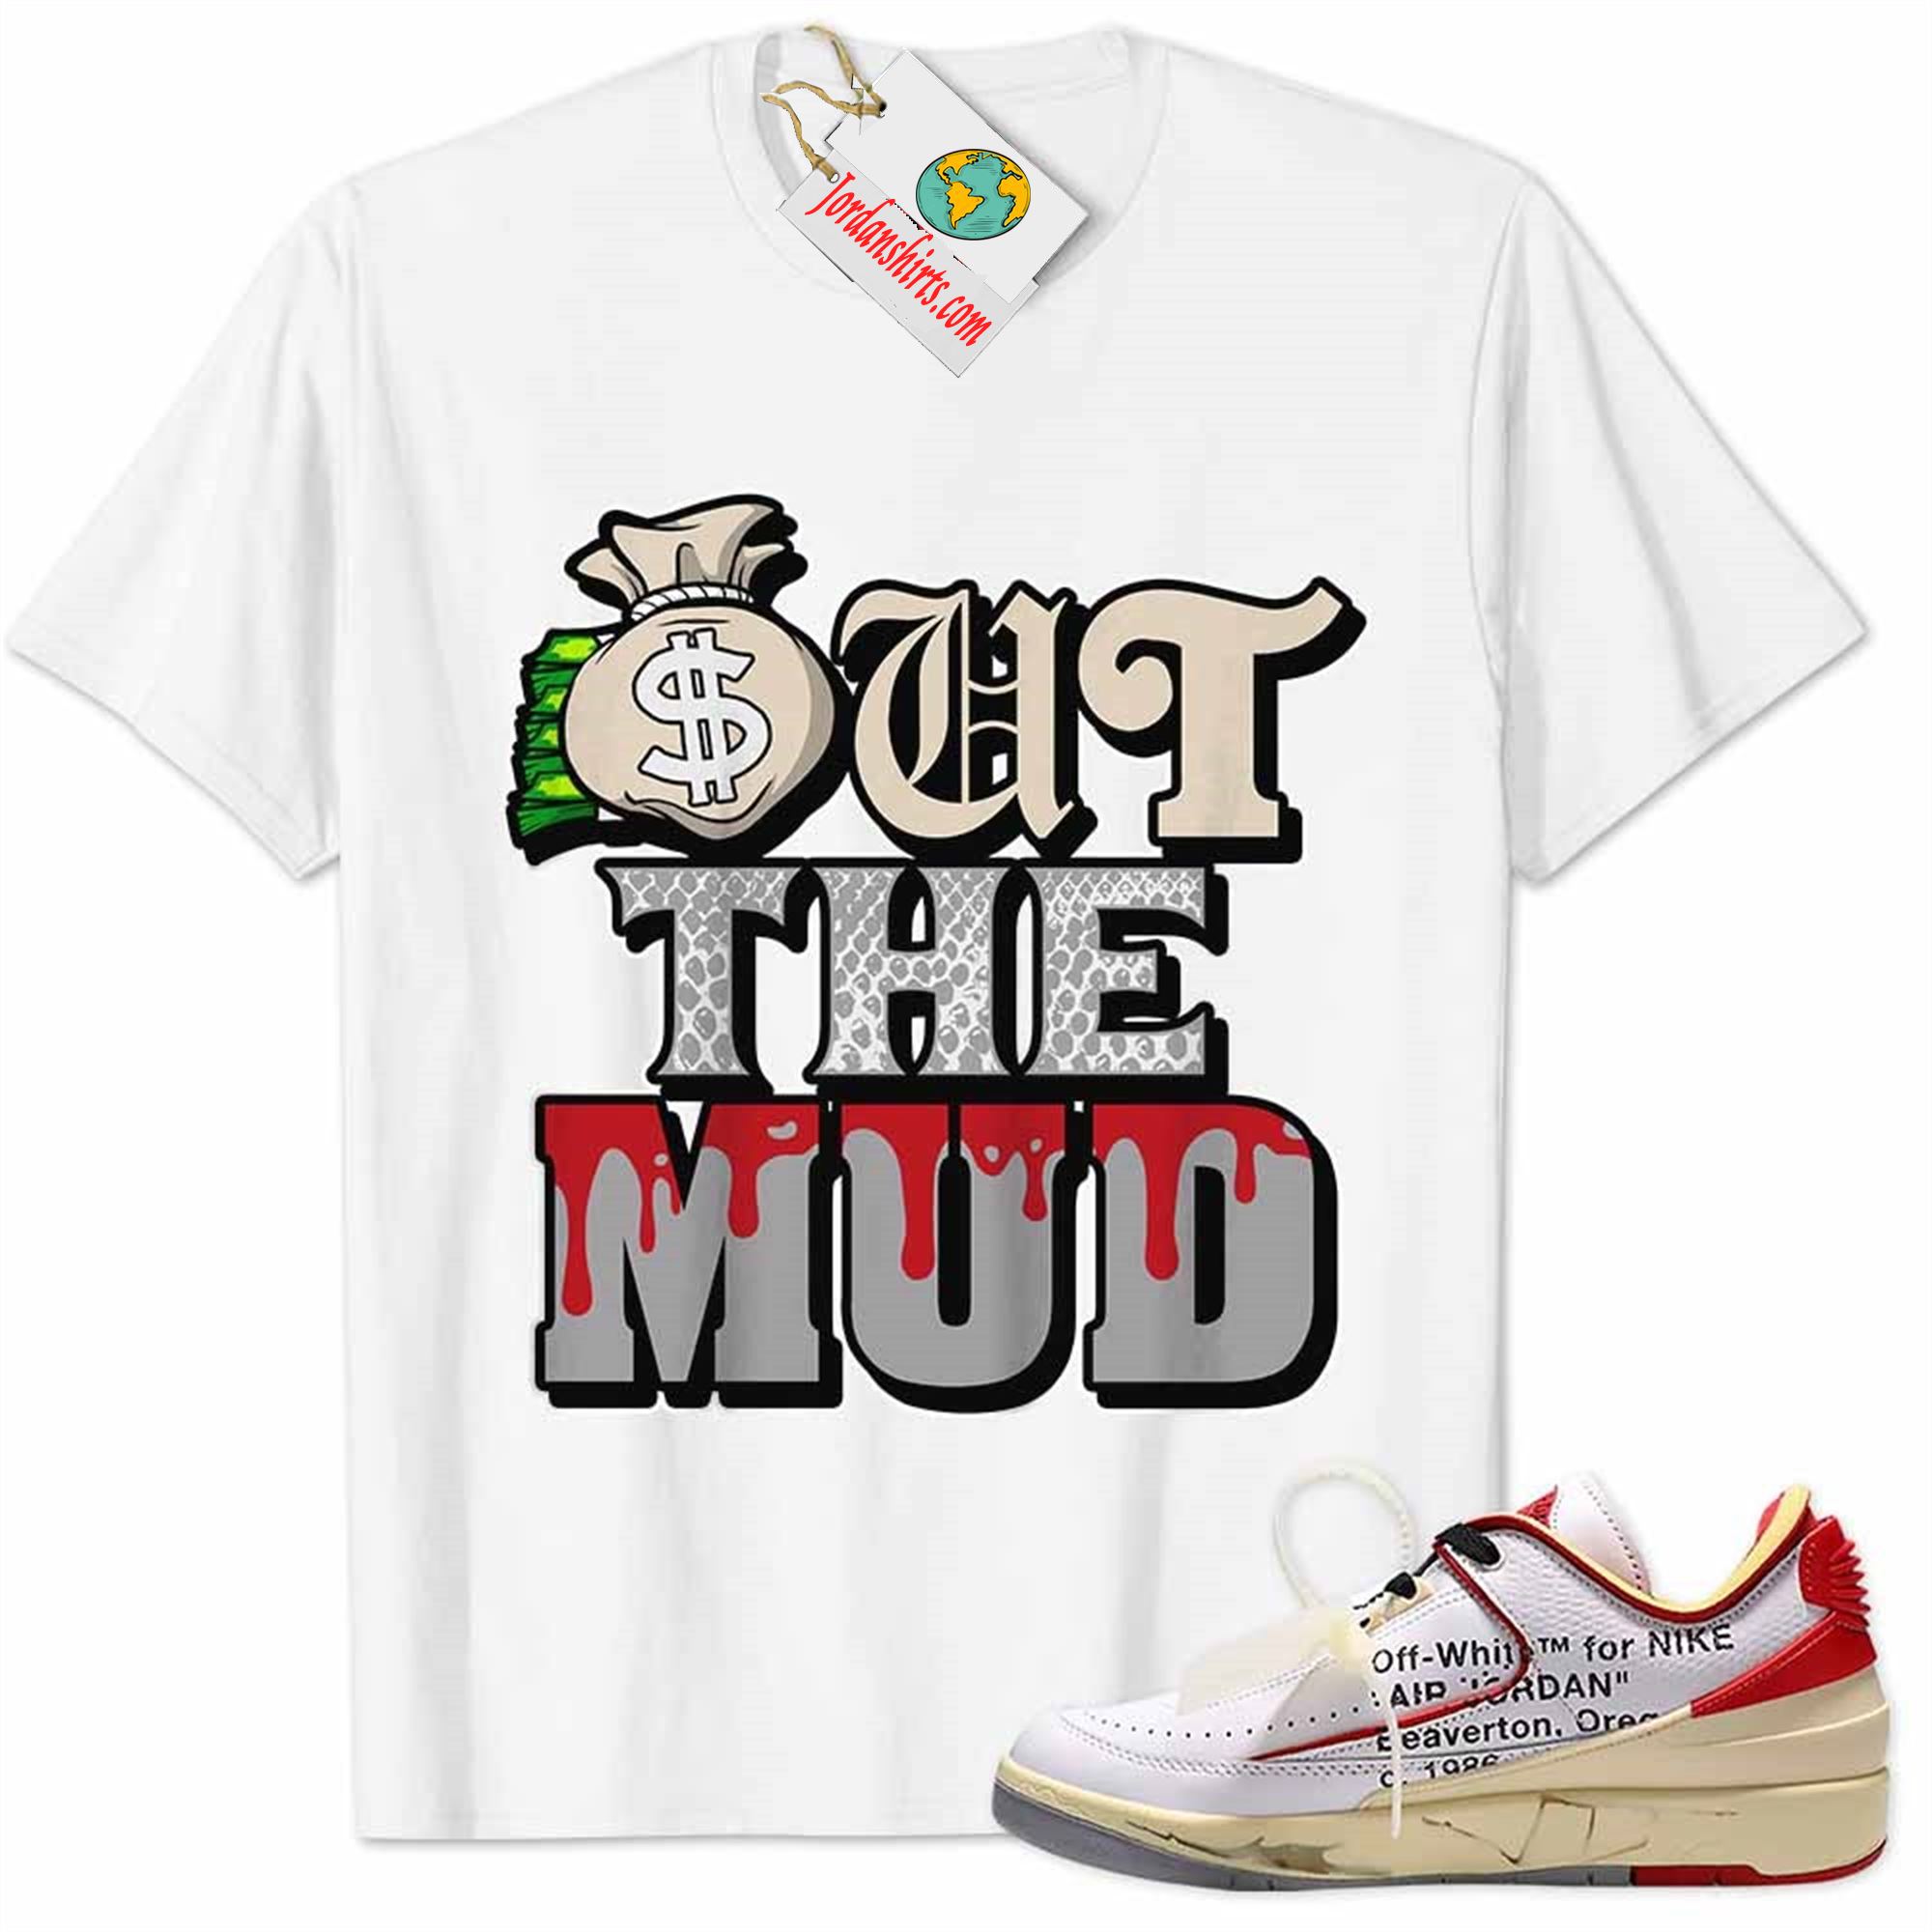 Jordan 2 Shirt, Jordan 2 Low White Red Off-white Shirt Out The Mud Money Bag White Plus Size Up To 5xl